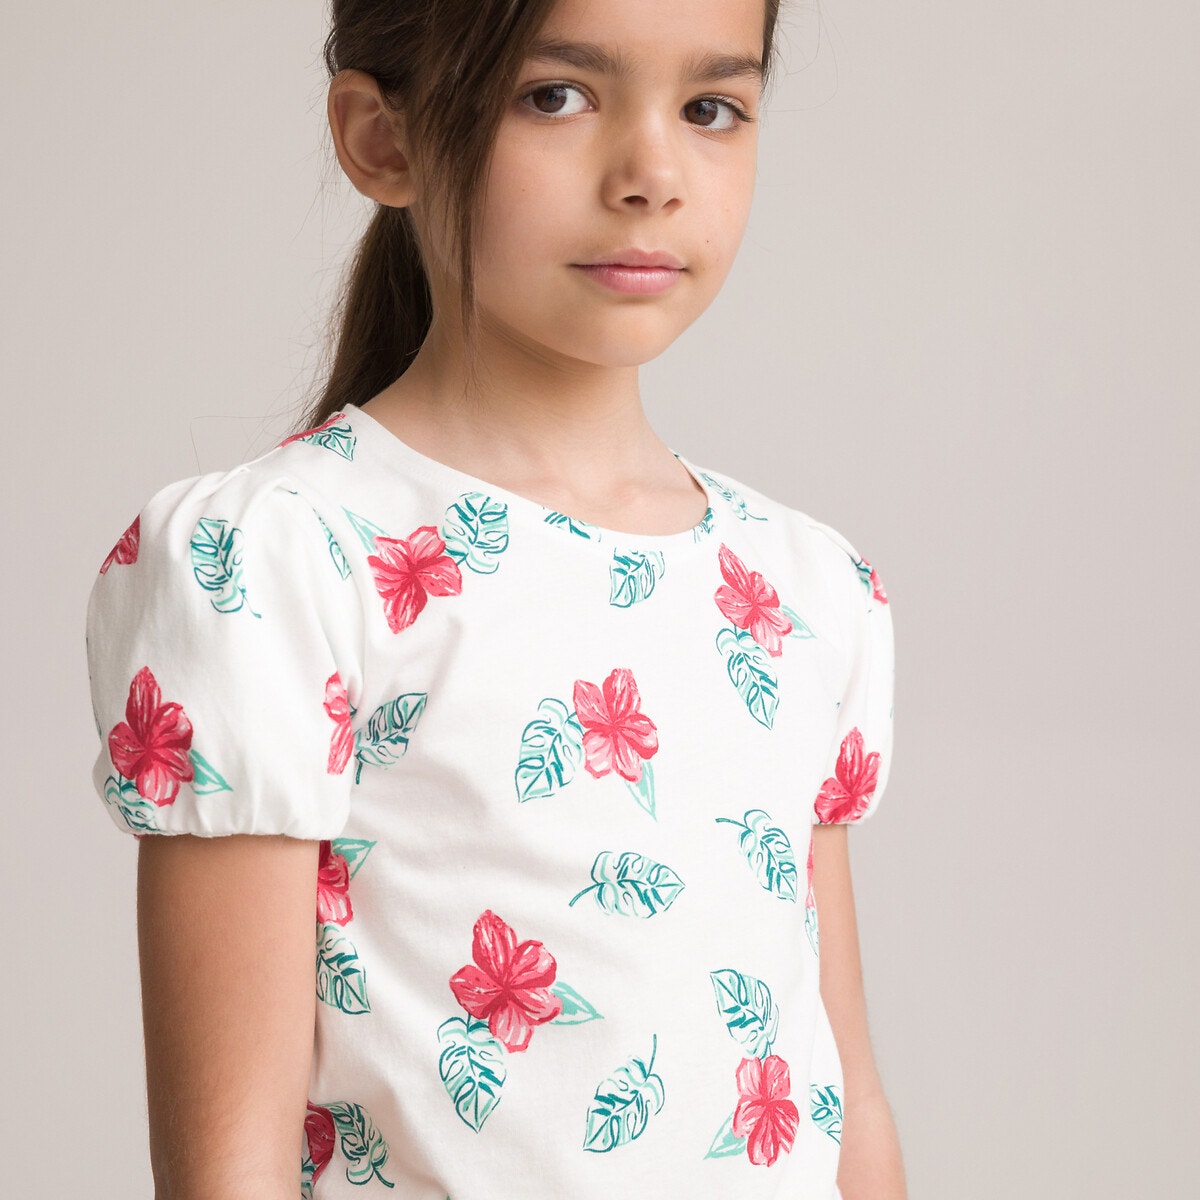 T-shirt από βιολογικό βαμβάκι με φλοράλ μοτίβο, 3-12 ετών